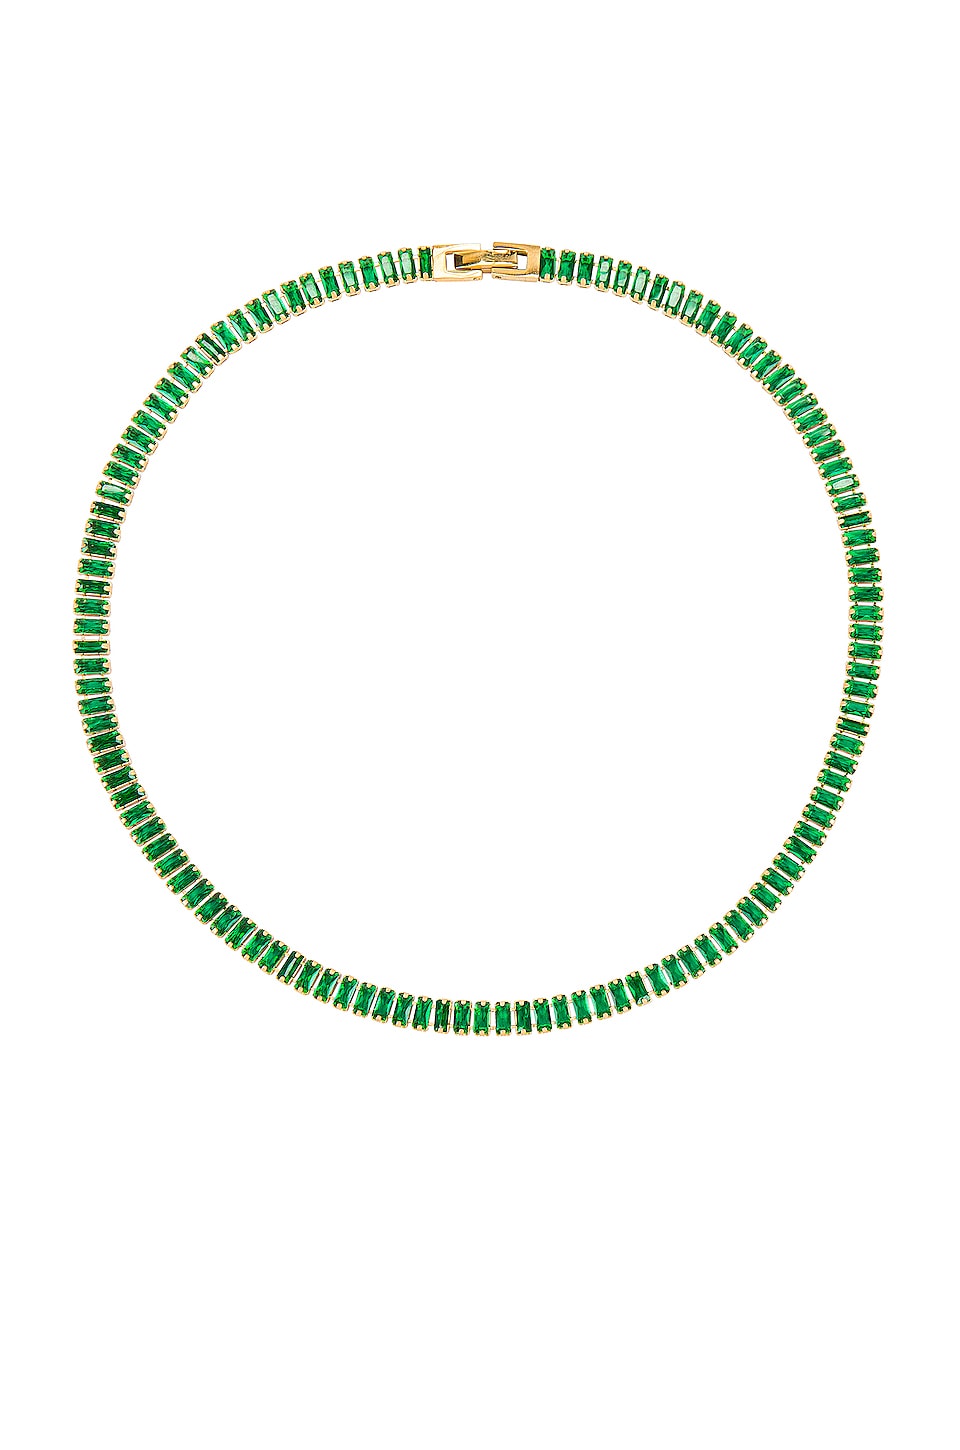 Candybar Necklace in Emerald 